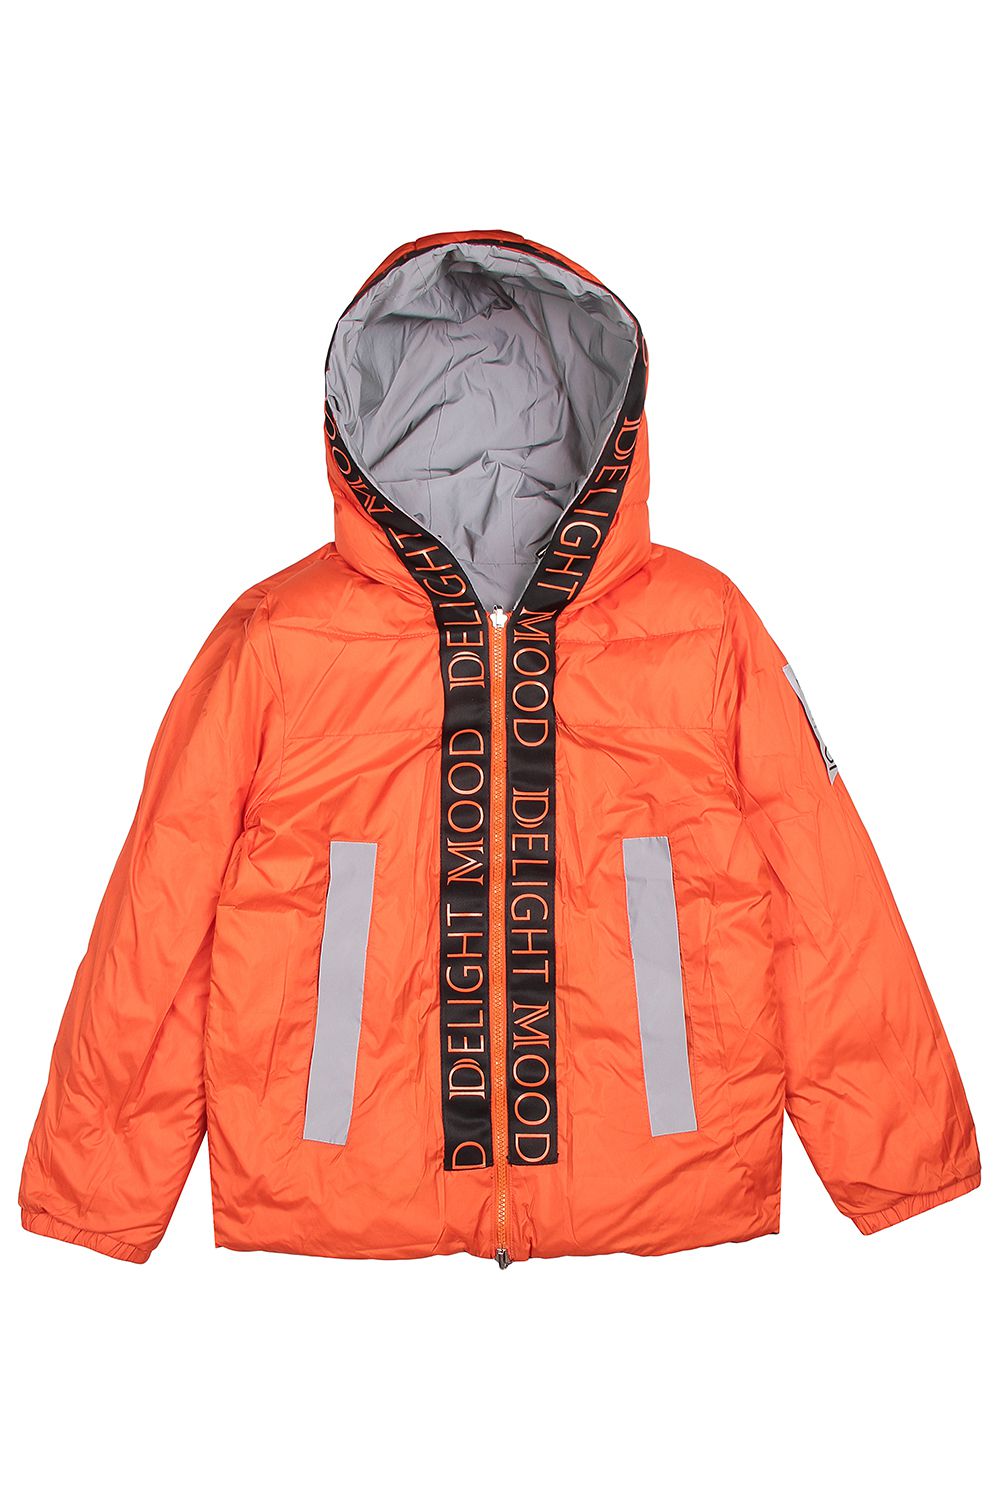 Куртка Noble People, размер 140, цвет оранжевый - фото 3